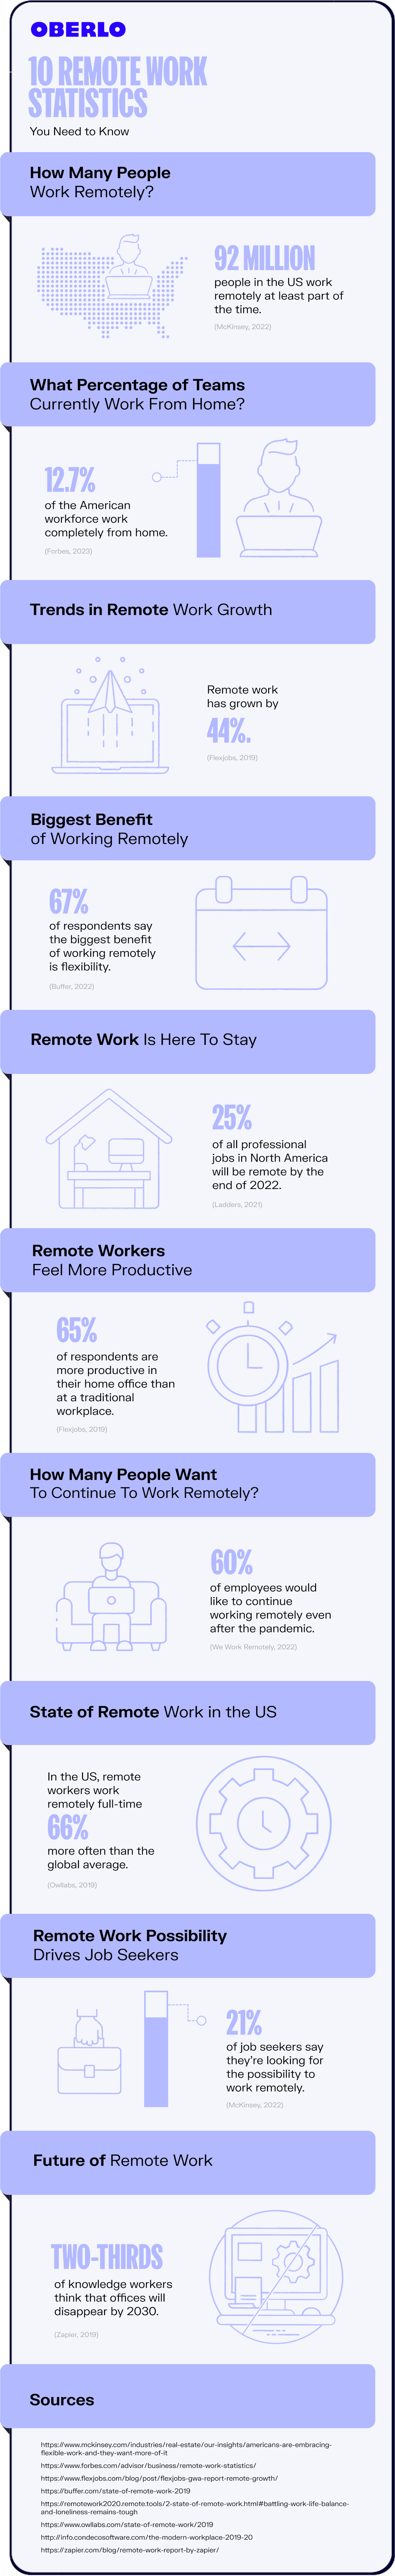 remote work statistics full infographic